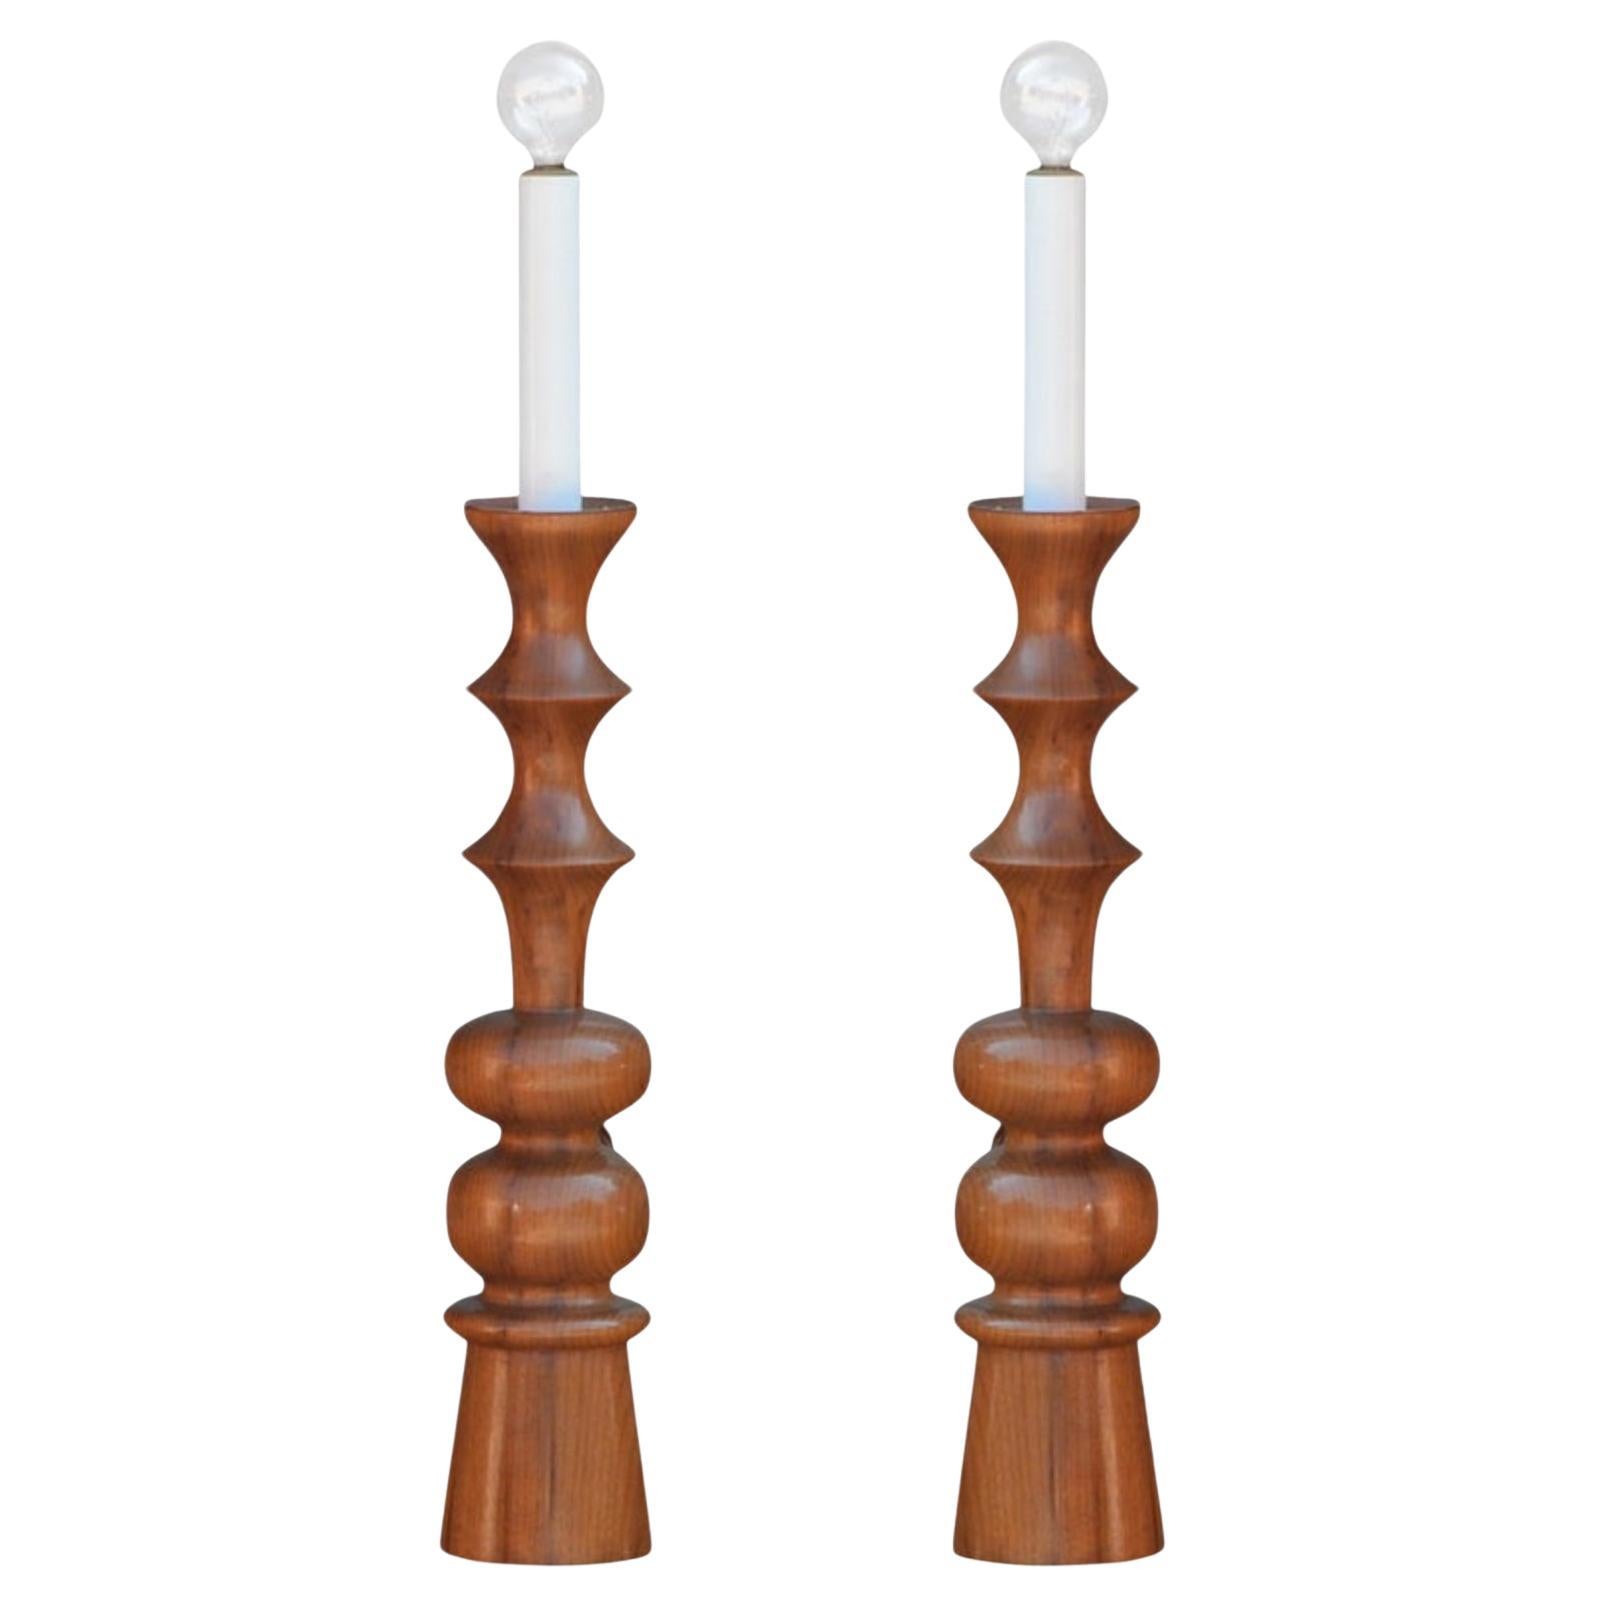 Pair of Elegant Turned Wood Candlestick Mantel Lights For Sale